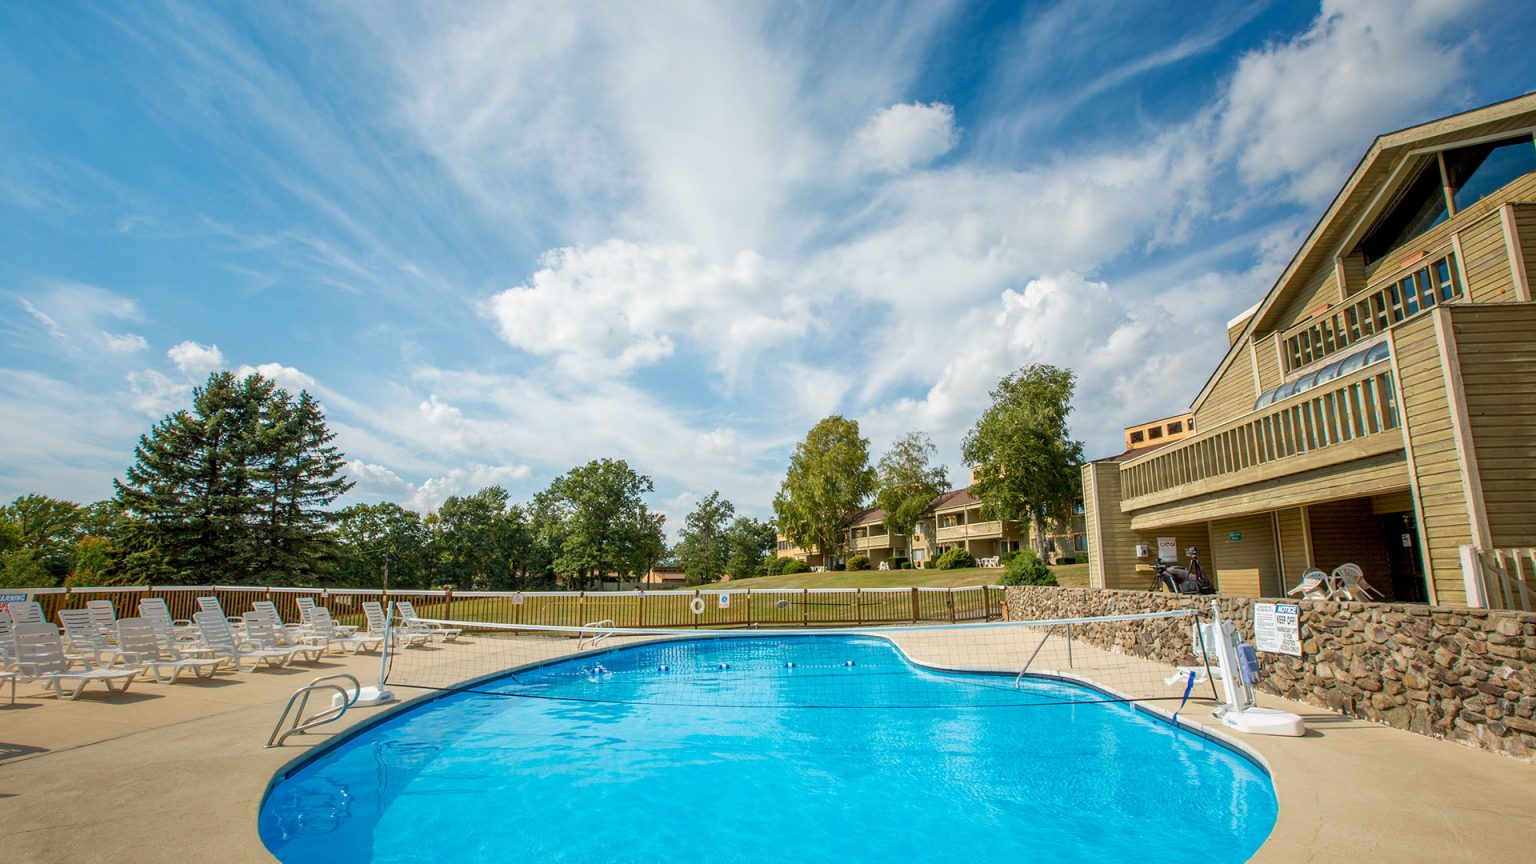 royal-holiday-hotel-resort-alberca-tanglwood-resort-eu-pennsylvania-poconos-1536x864